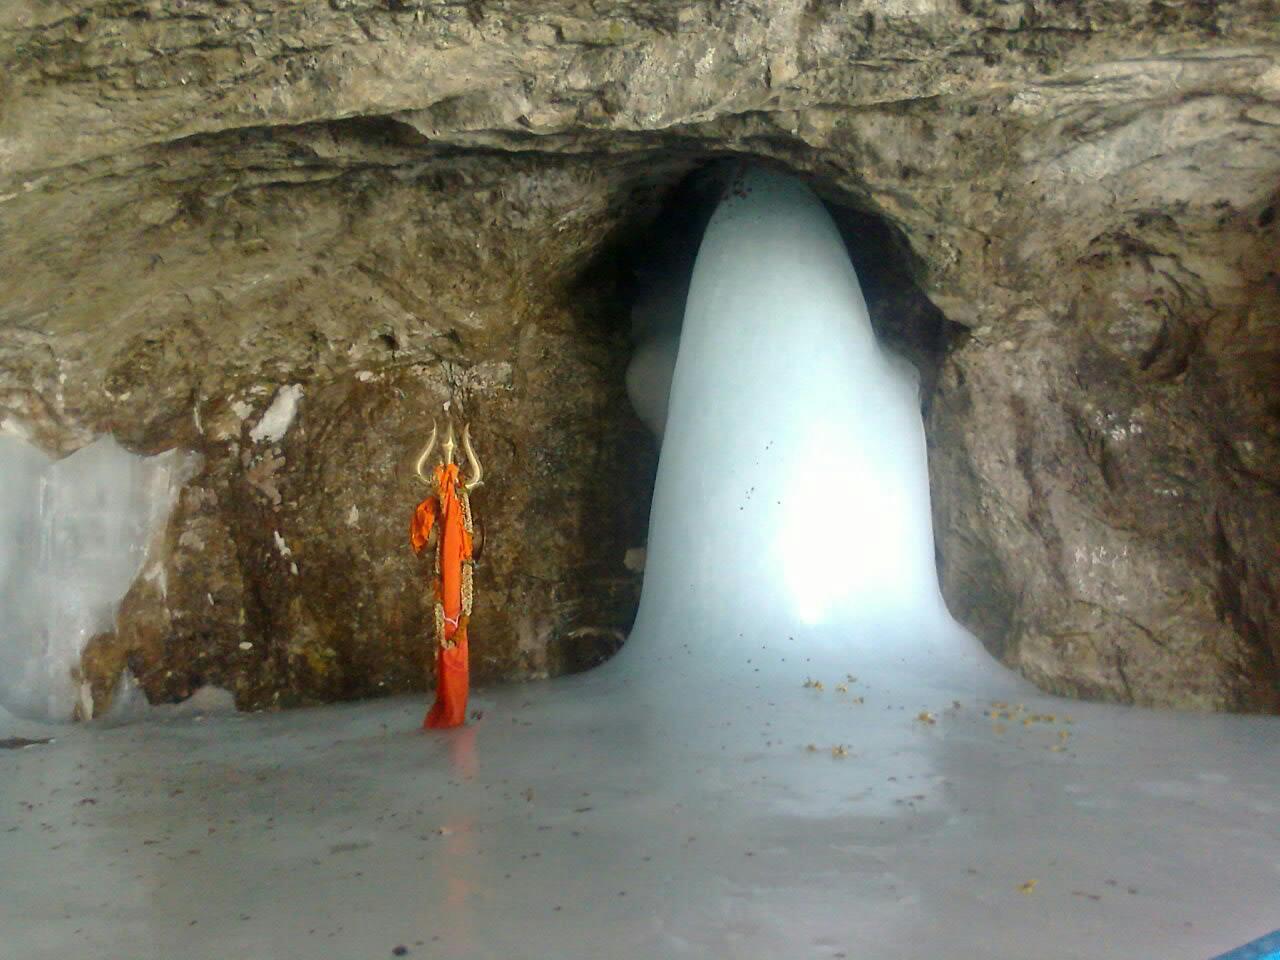 Amarnath Cave Temple